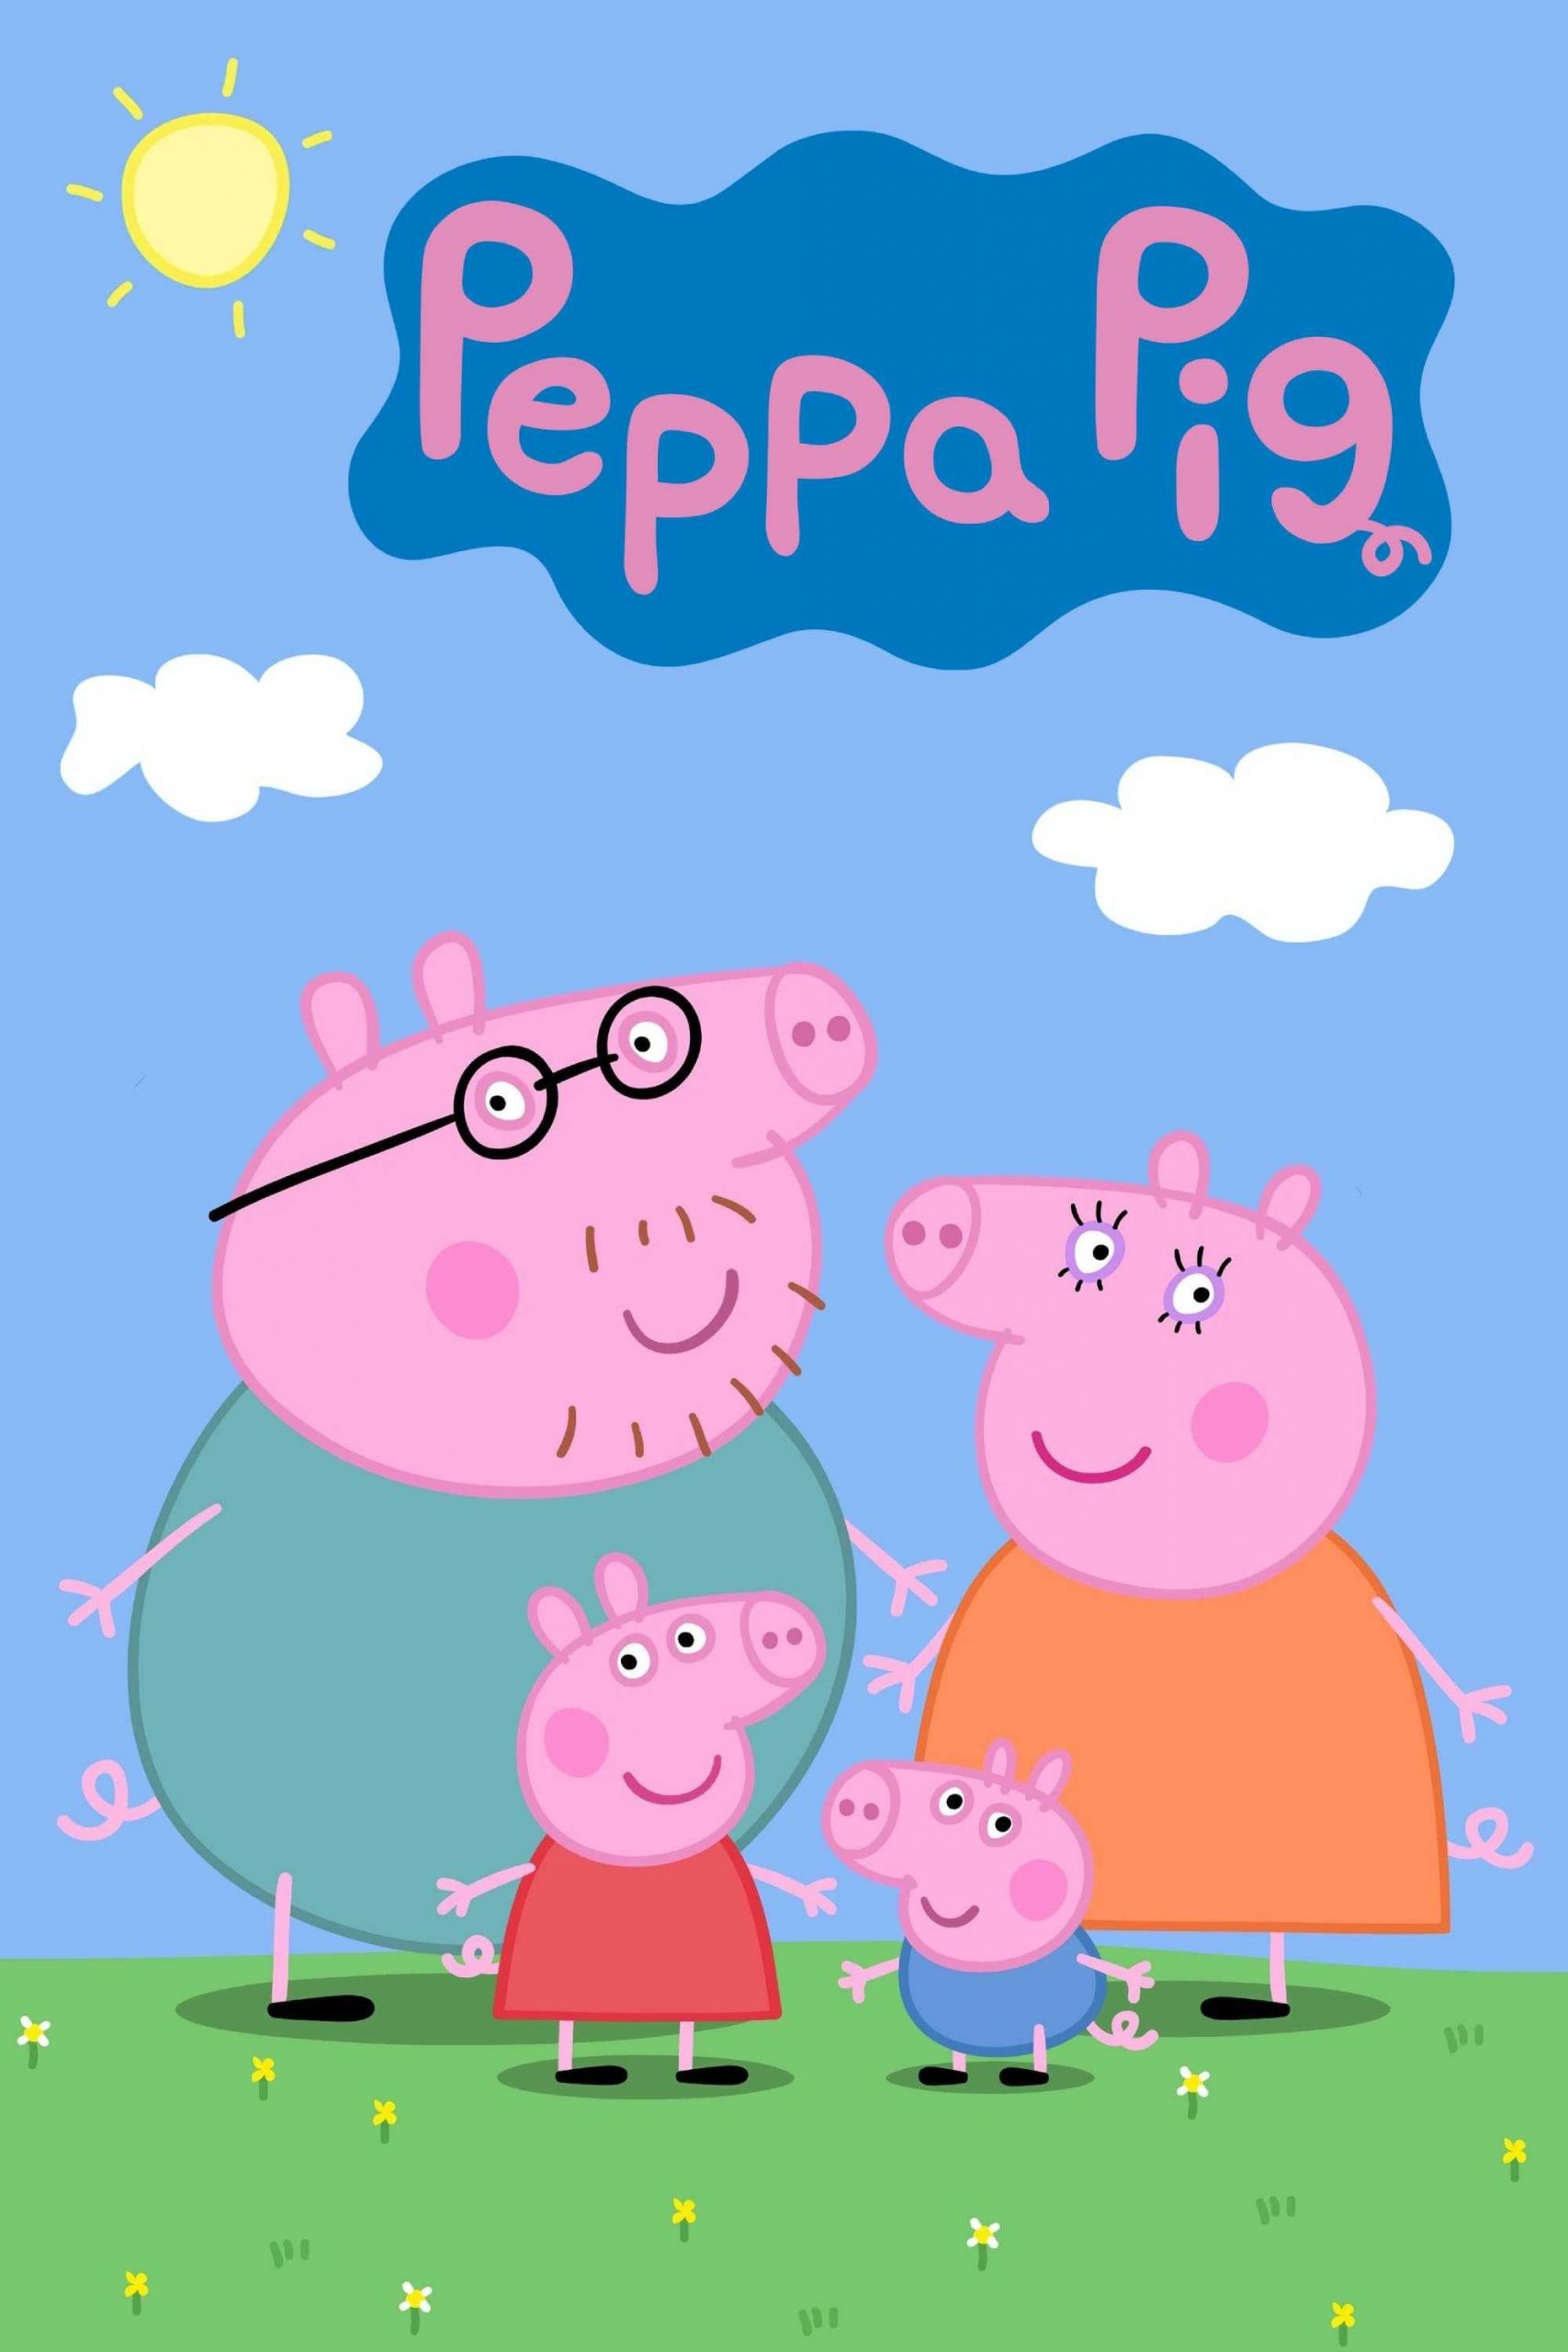 peppa-pig-wallpaper-round